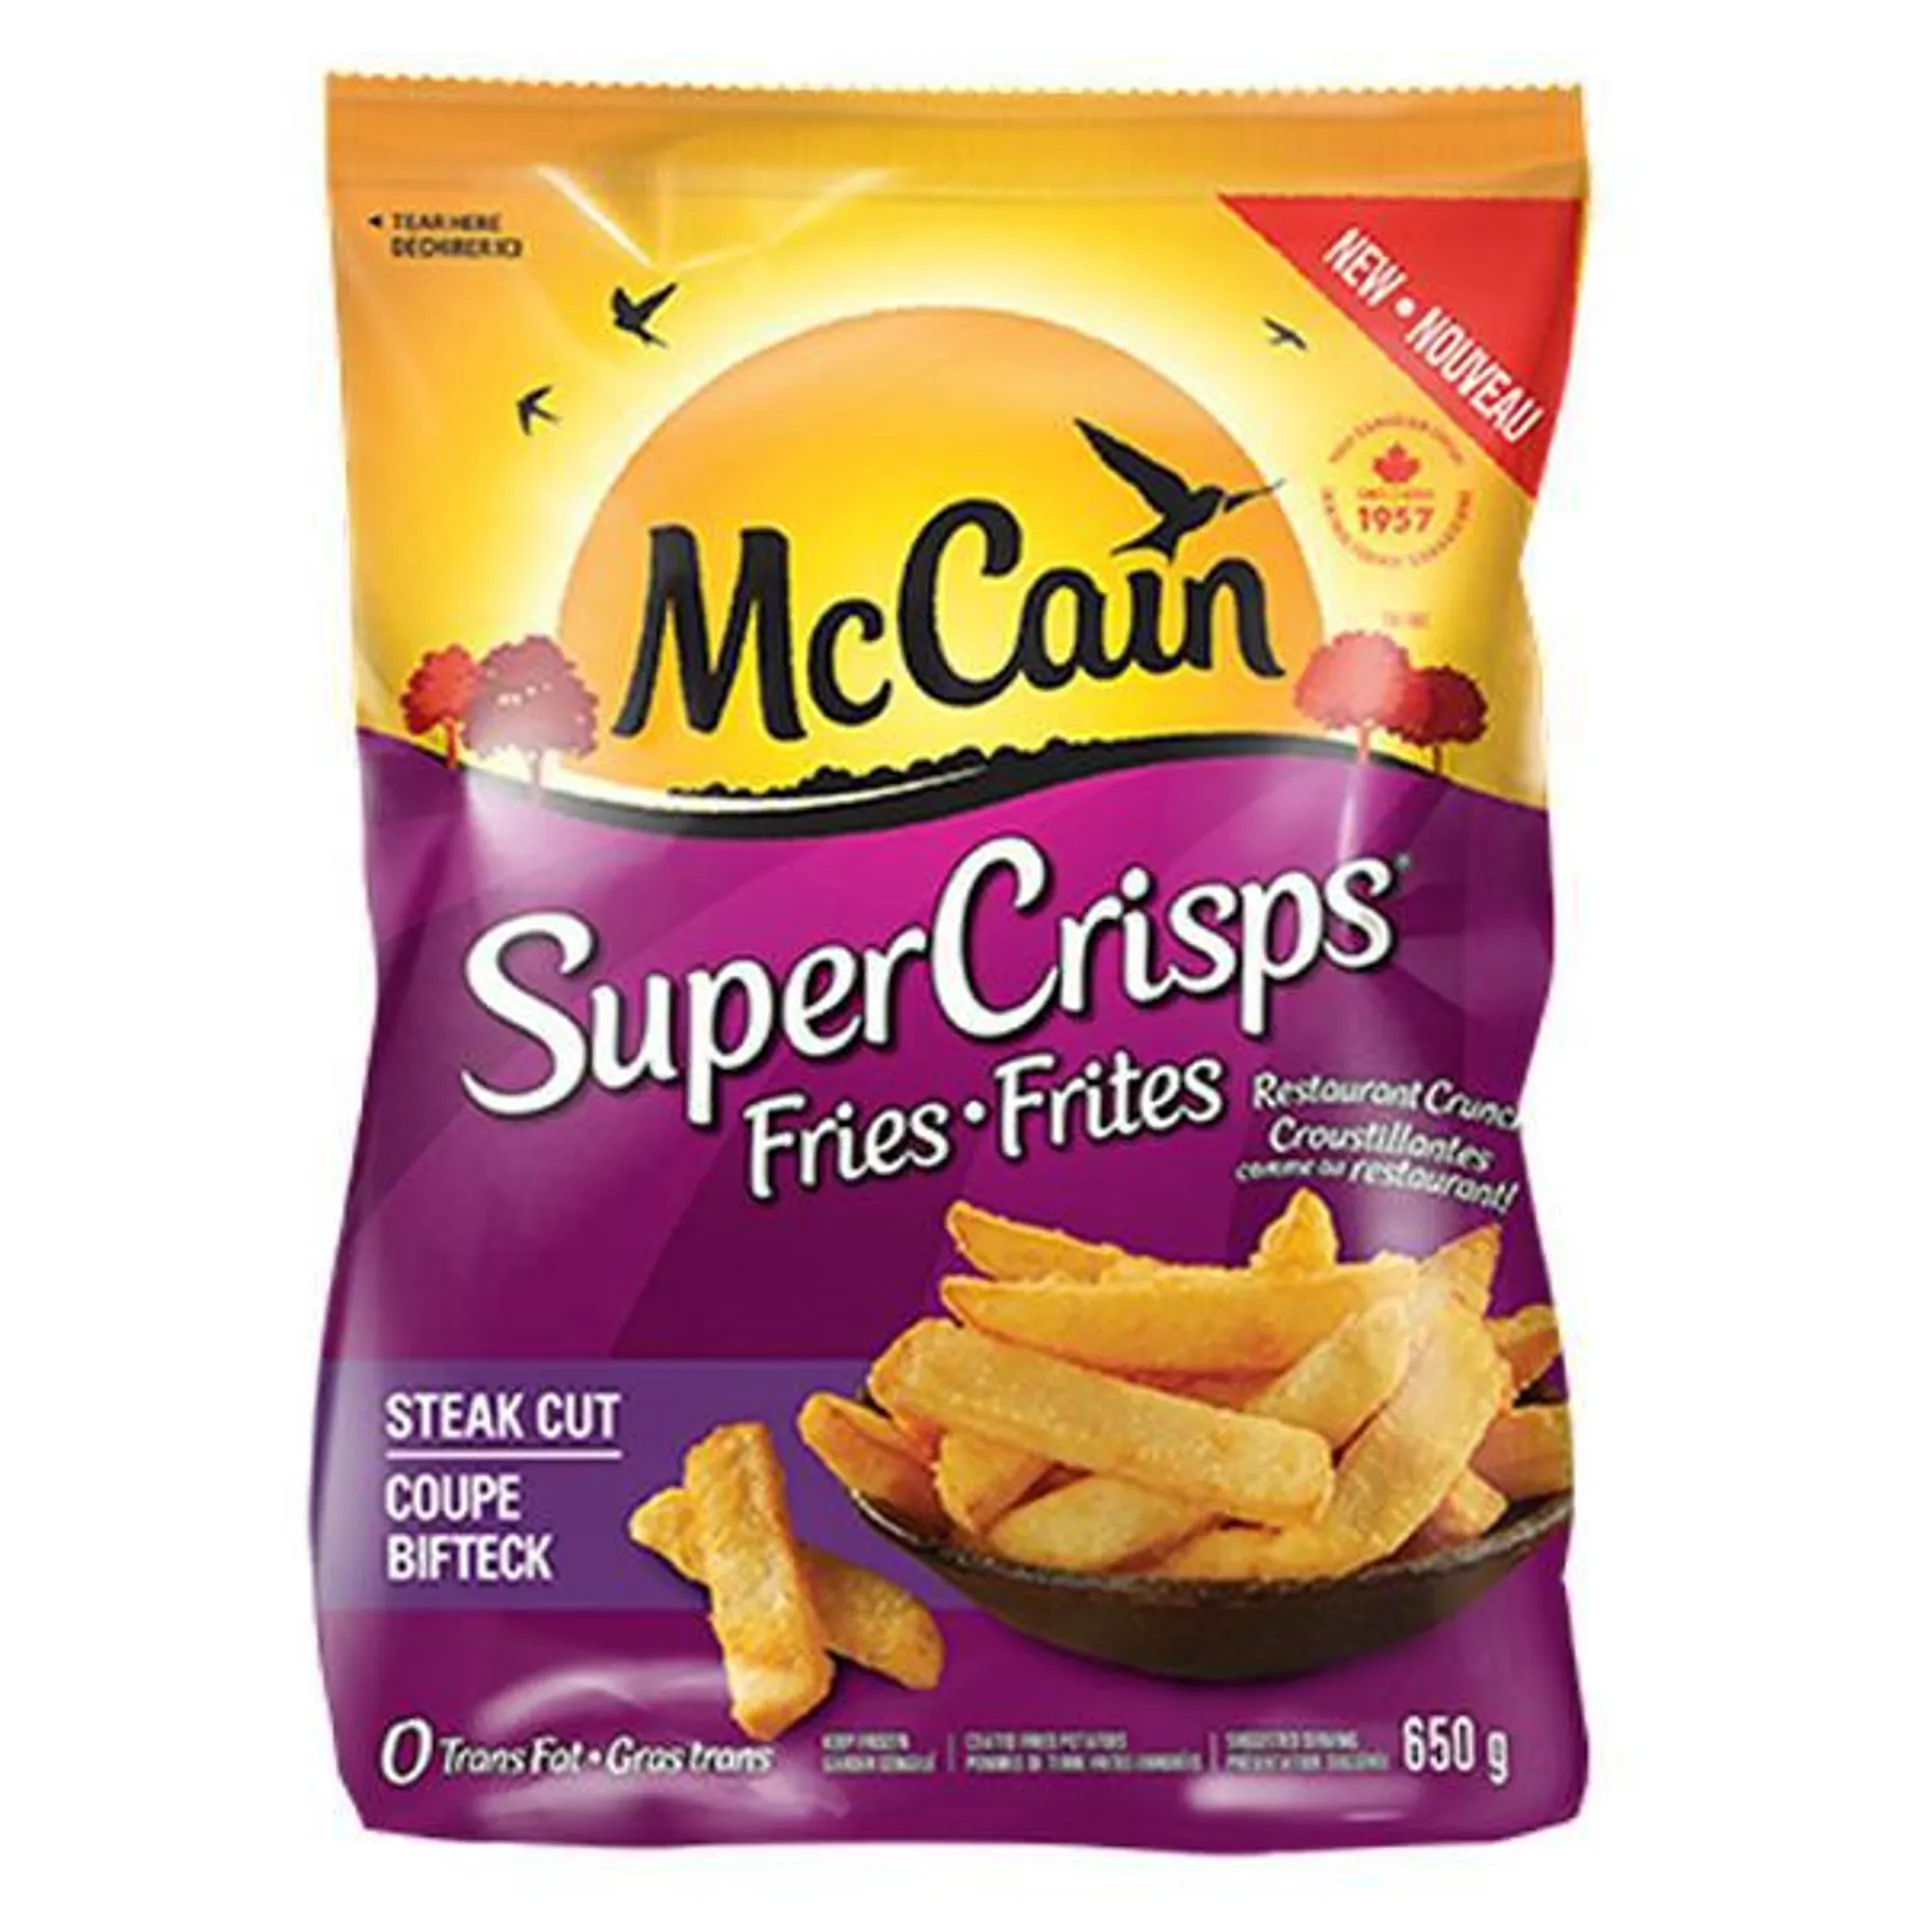 Mccain Potato Chips Spicy 650g